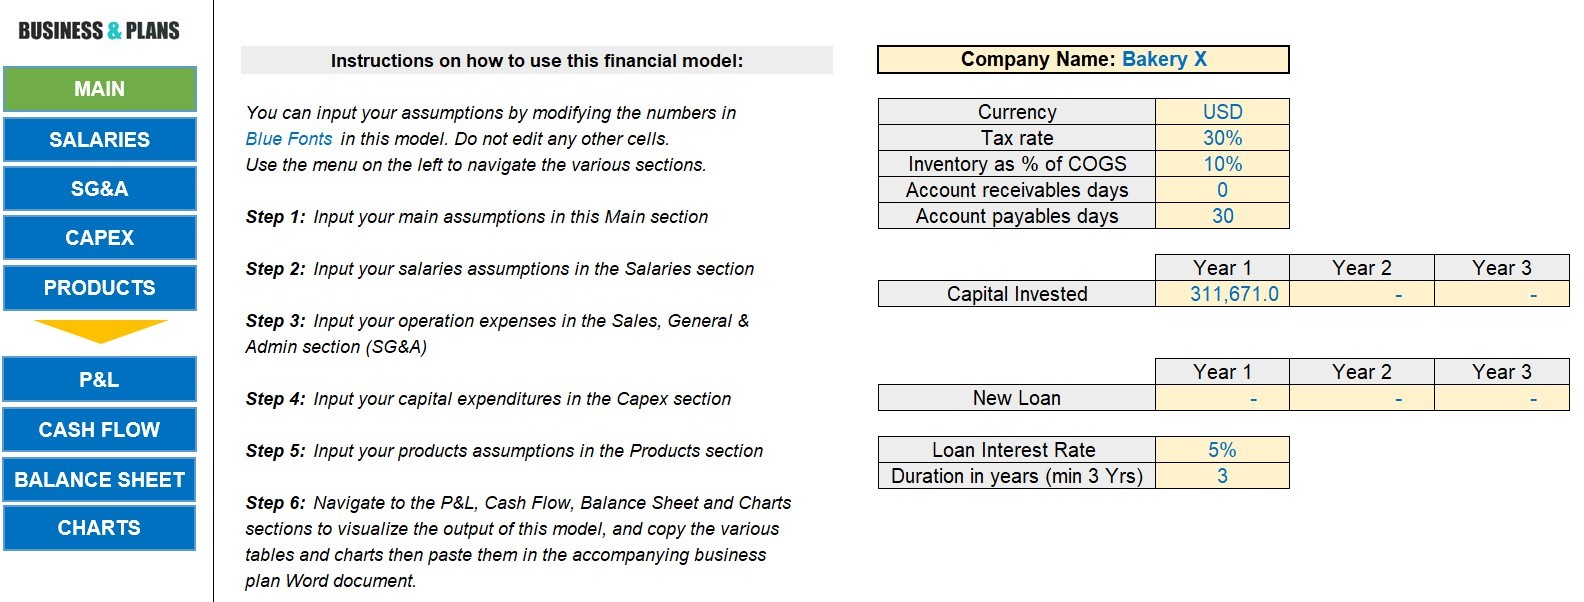 Bakery financial plan in Excel